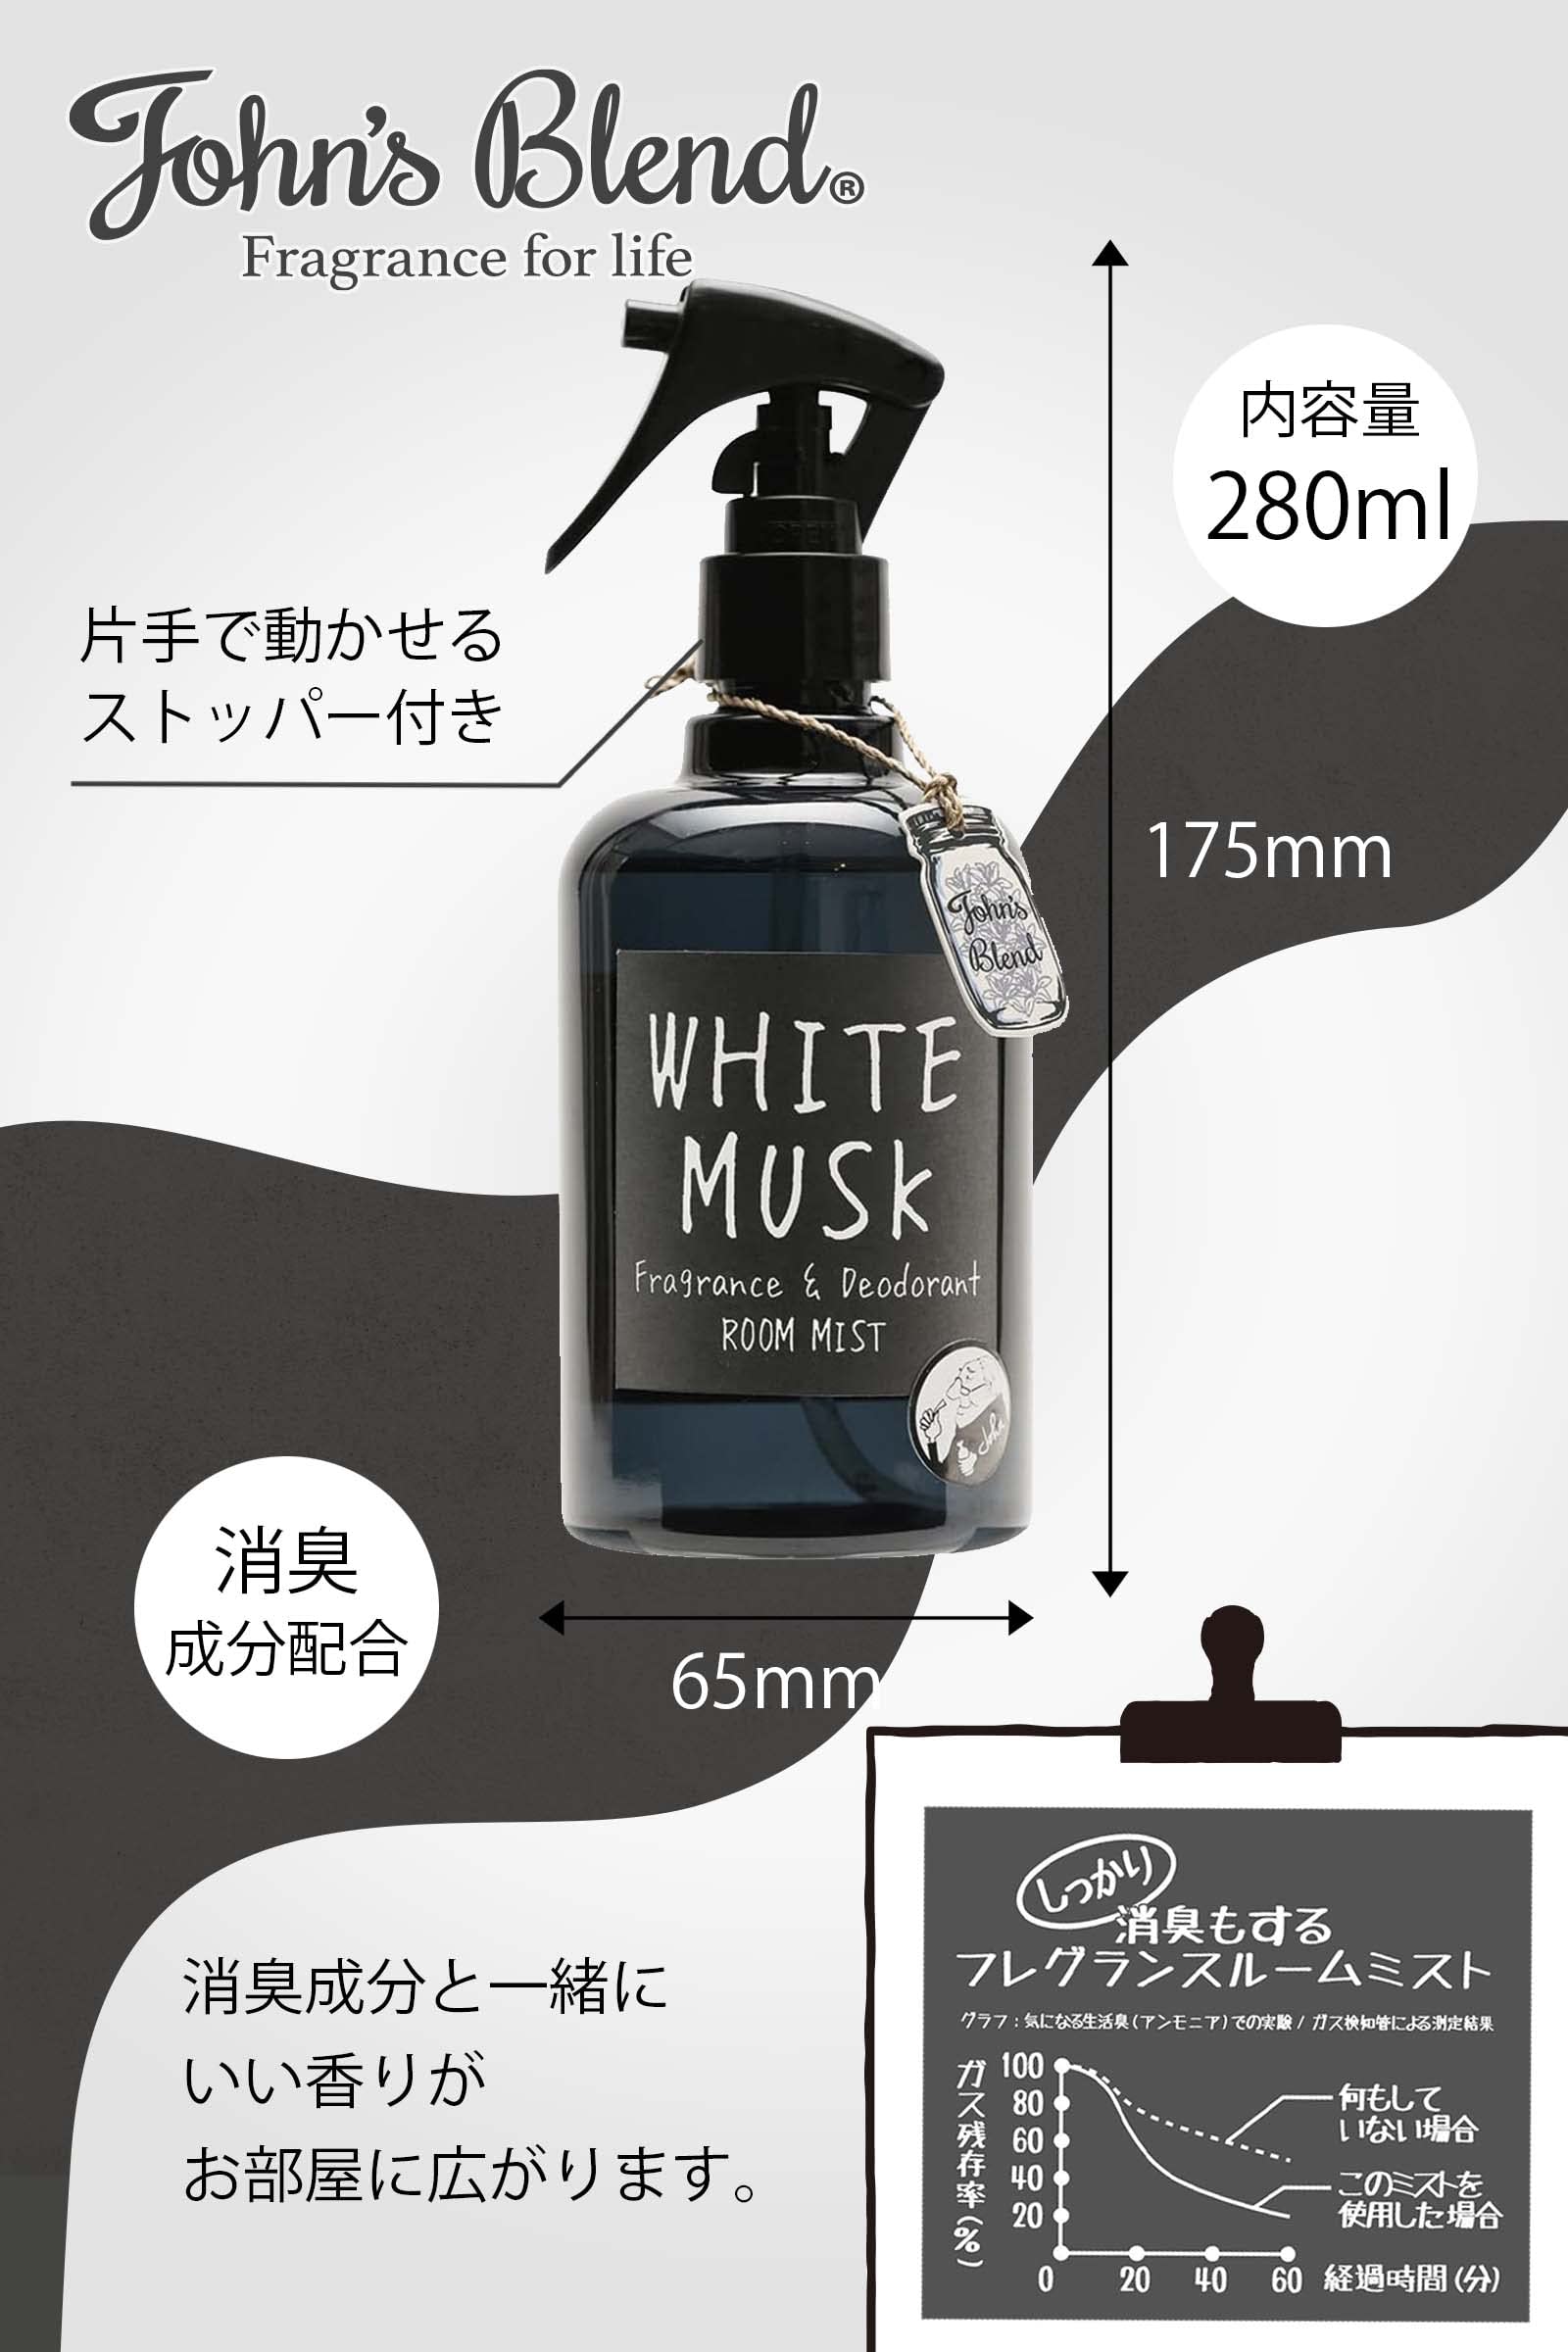 john's blend fragrance and deodorant room mist 280ml - white musk feature1